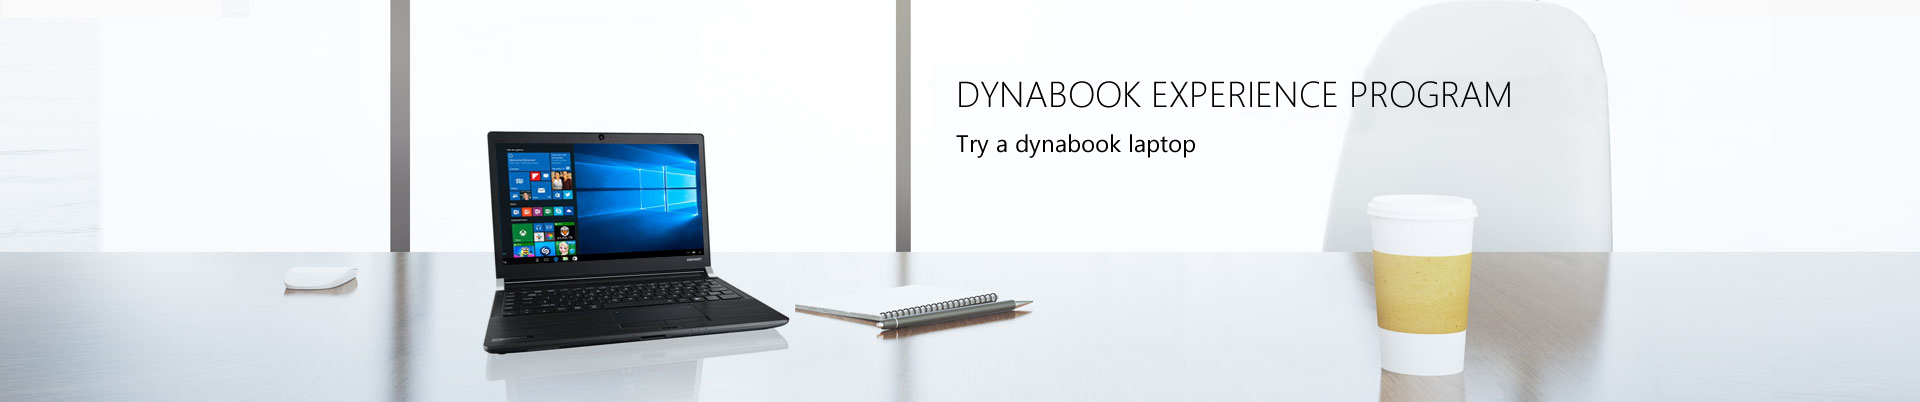 Dynabook Experience Program - Try a Dynabook Laptop